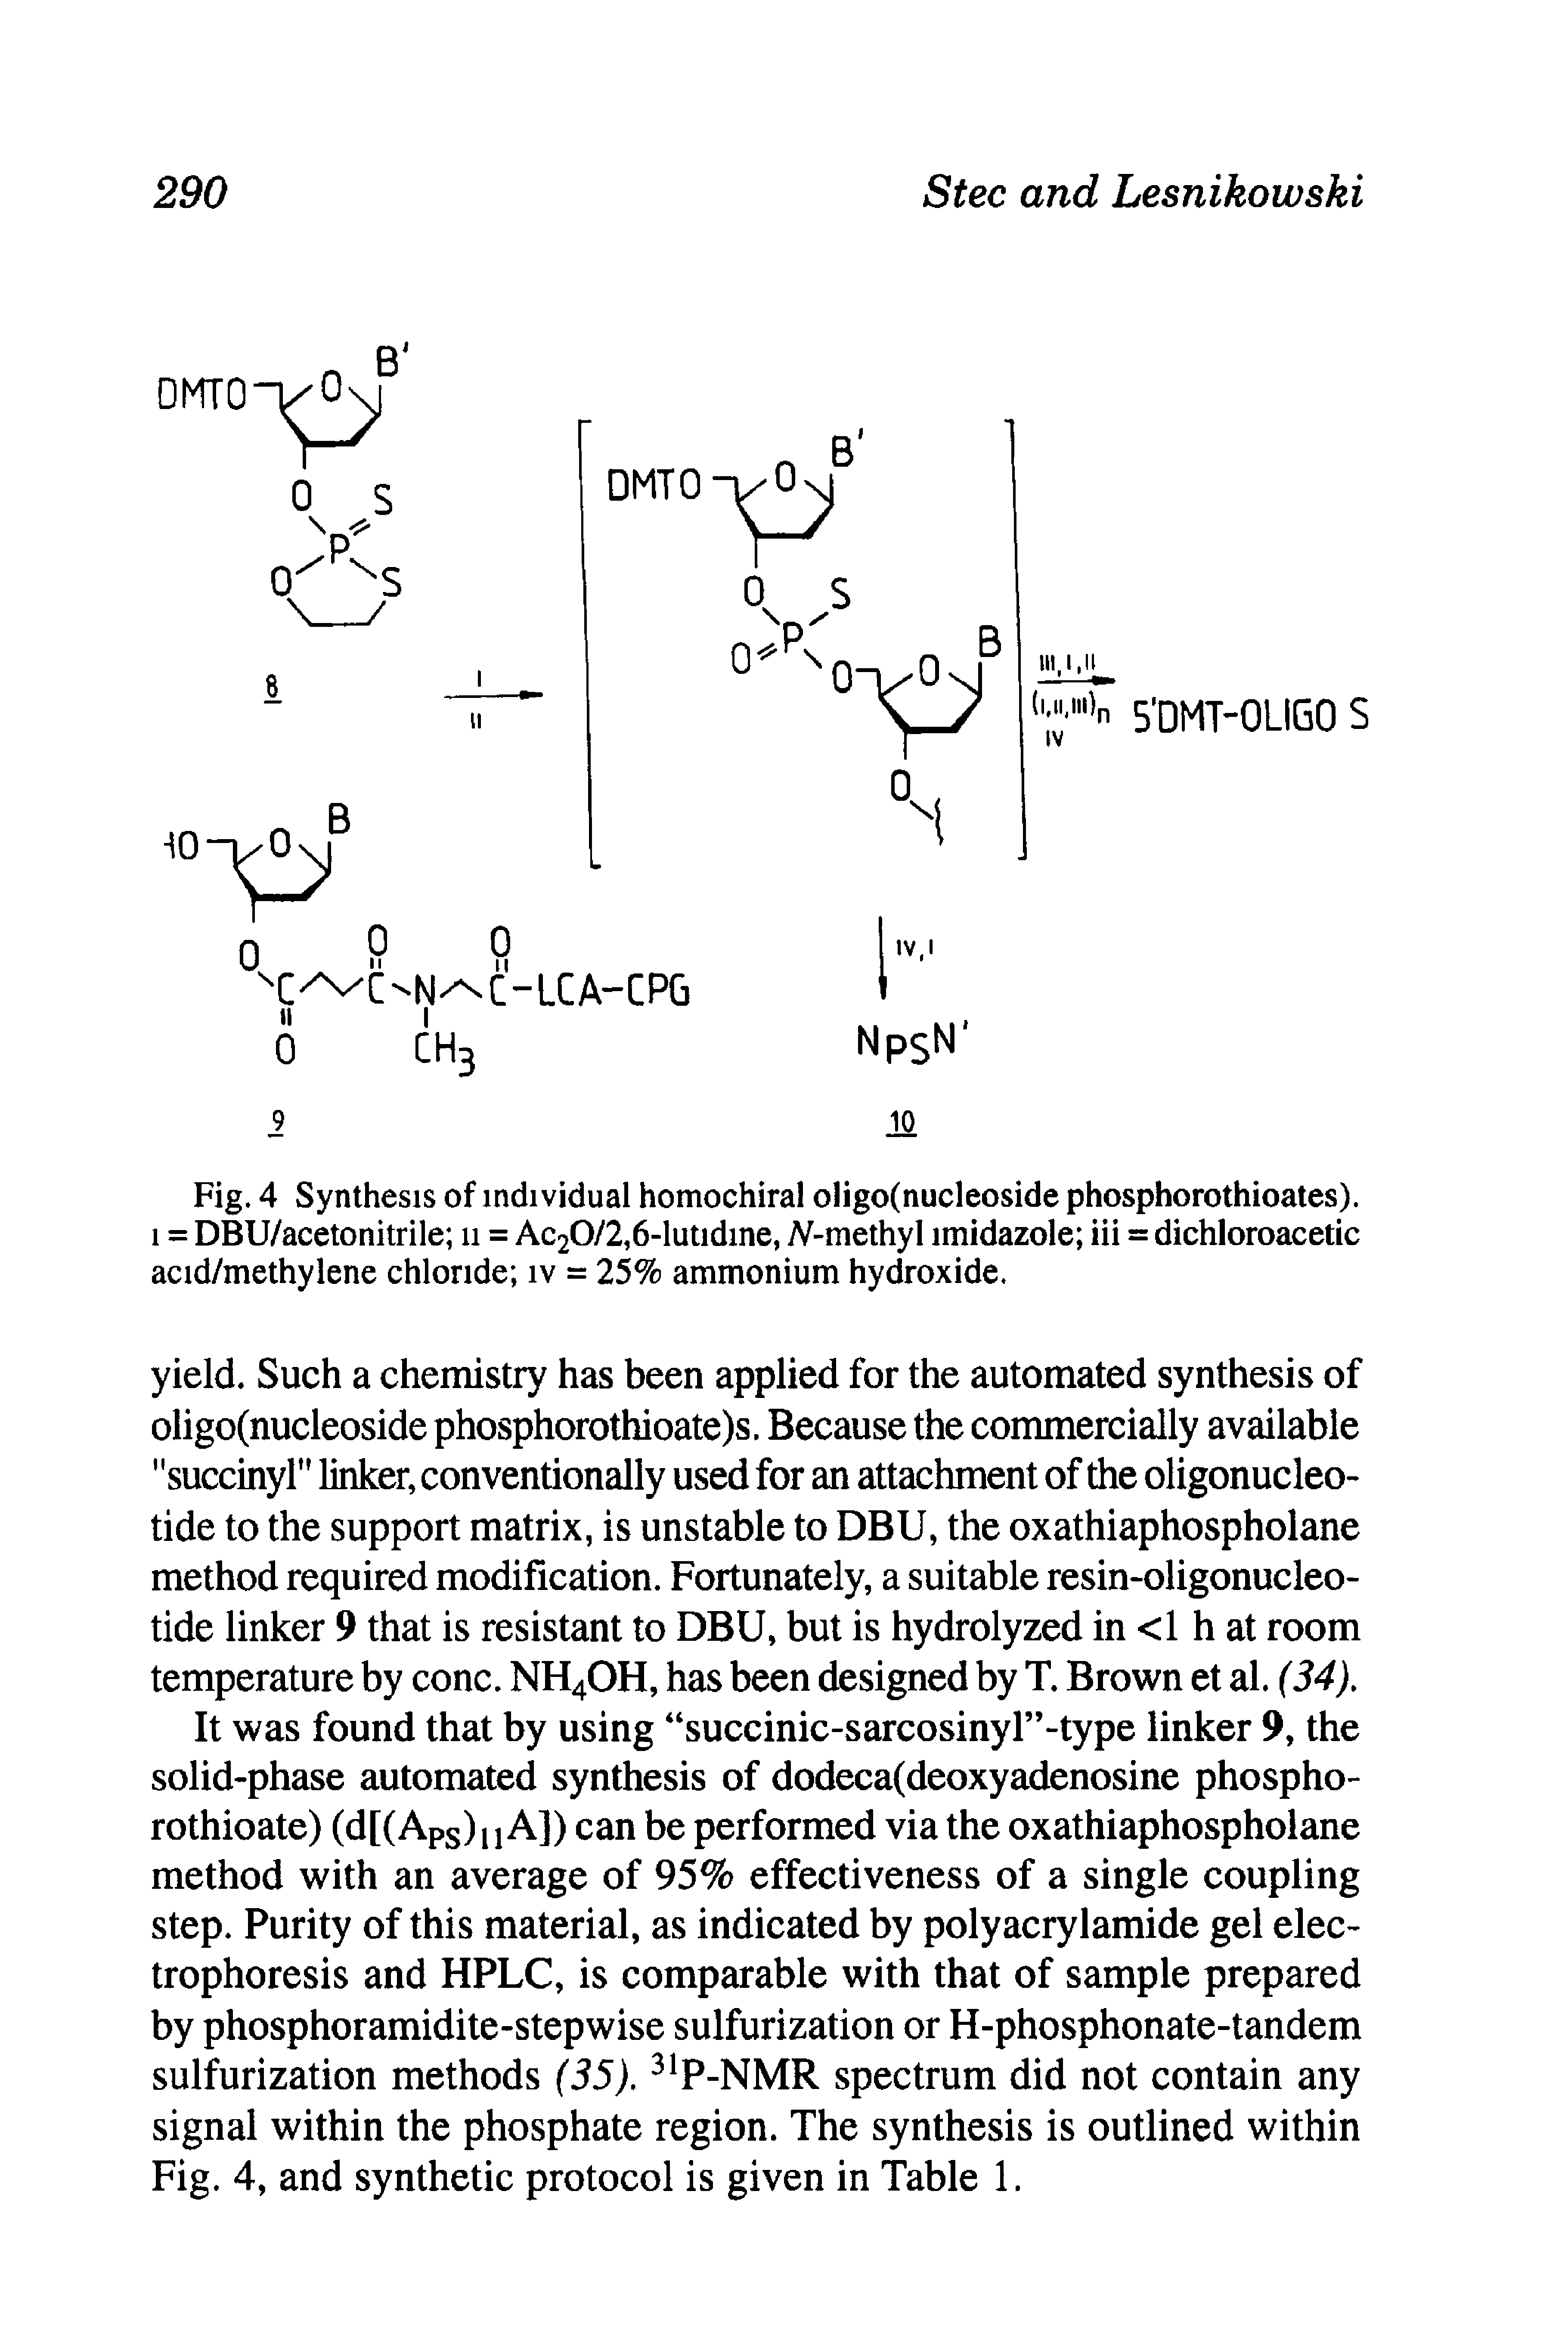 Fig. 4 Synthesis of individual homochiral oligo(nucleoside phosphorothioates). 1 = DBU/acetonitrile ii = Ac20/2,6-lutidine, yV-methyl imidazole Hi=dichloroacetic acid/methylene chloride iv = 25% ammonium hydroxide.